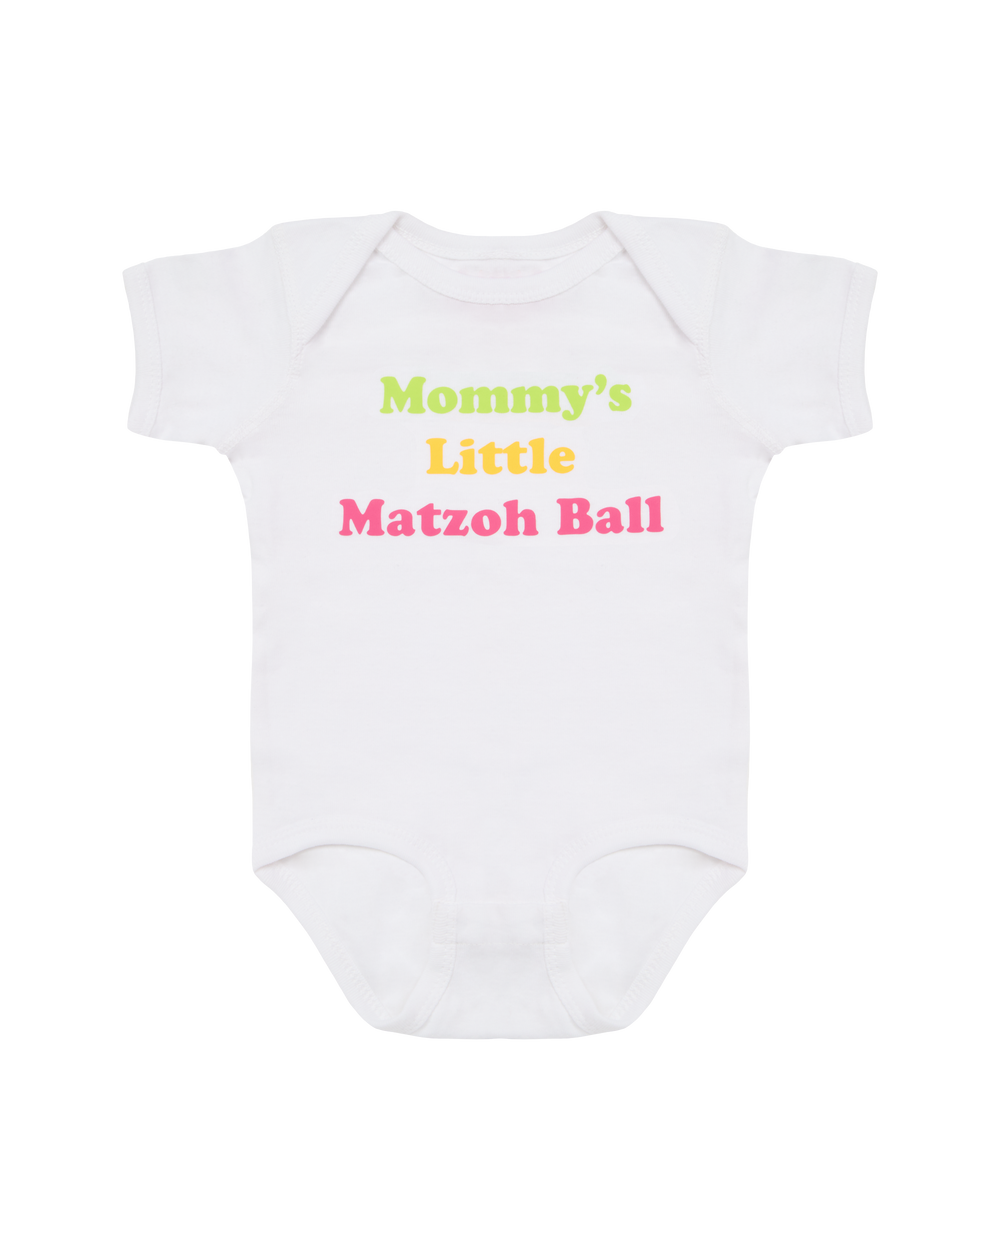 Mommy's Little Matzoh Ball Tee - Baby